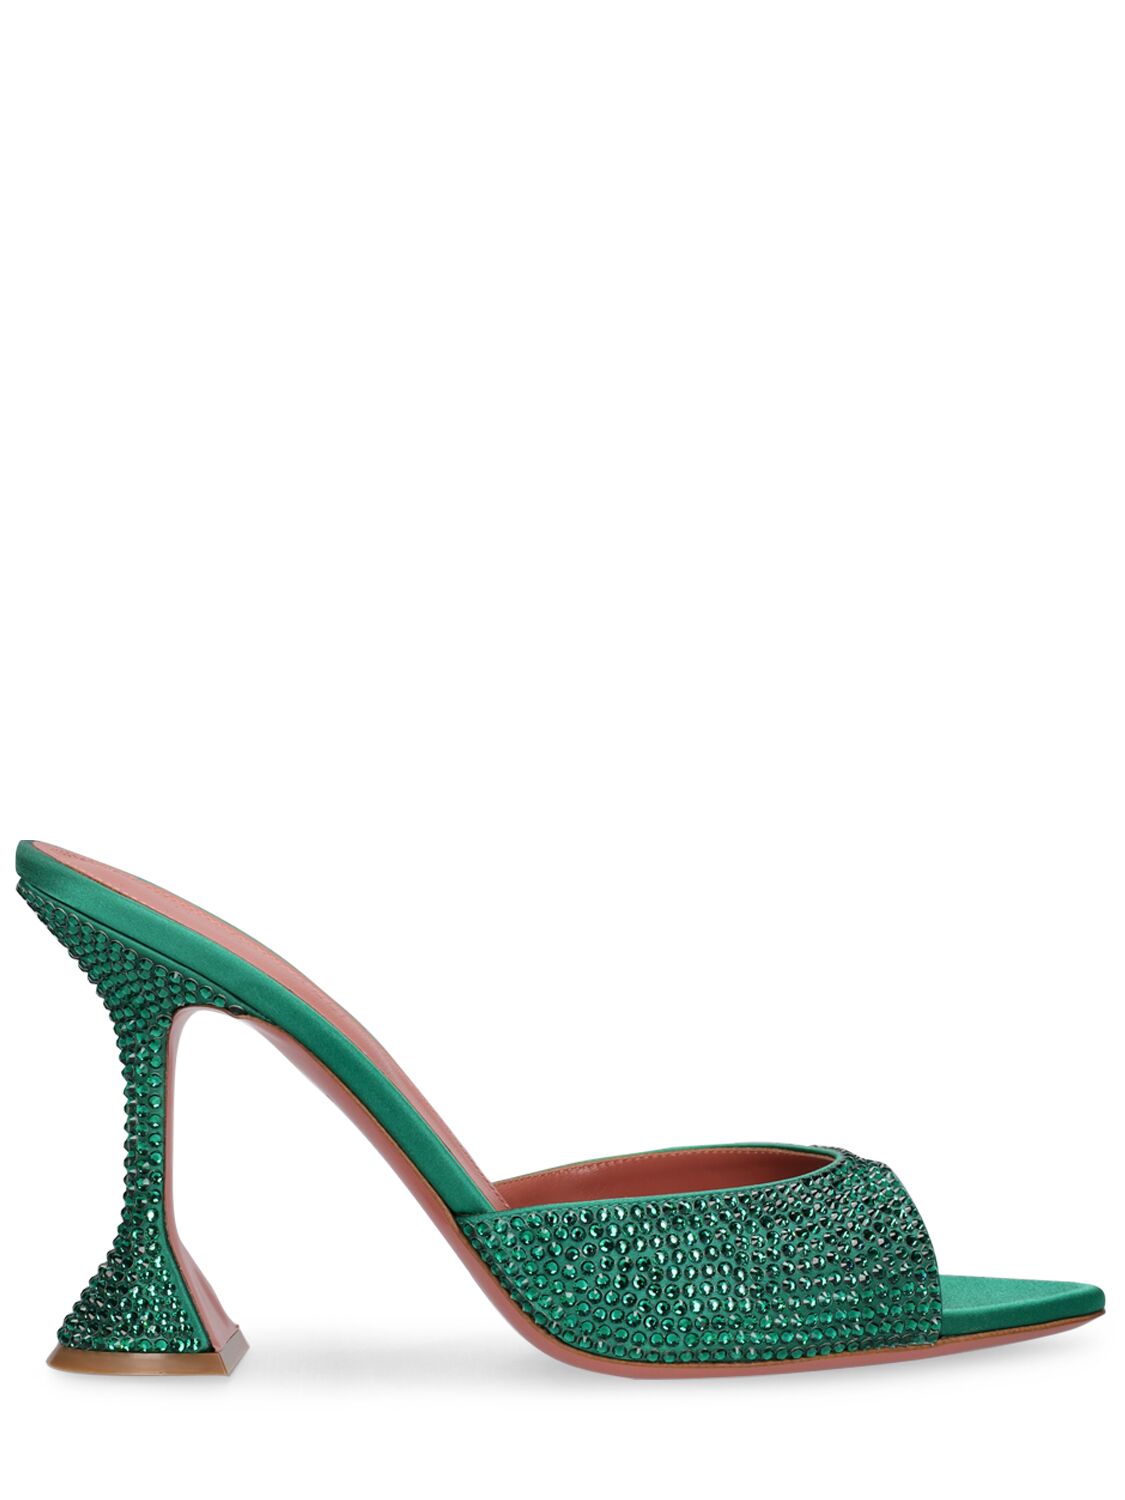 Amina Muaddi 95mm Carolin Crystal Embellished Sandals In Emerald